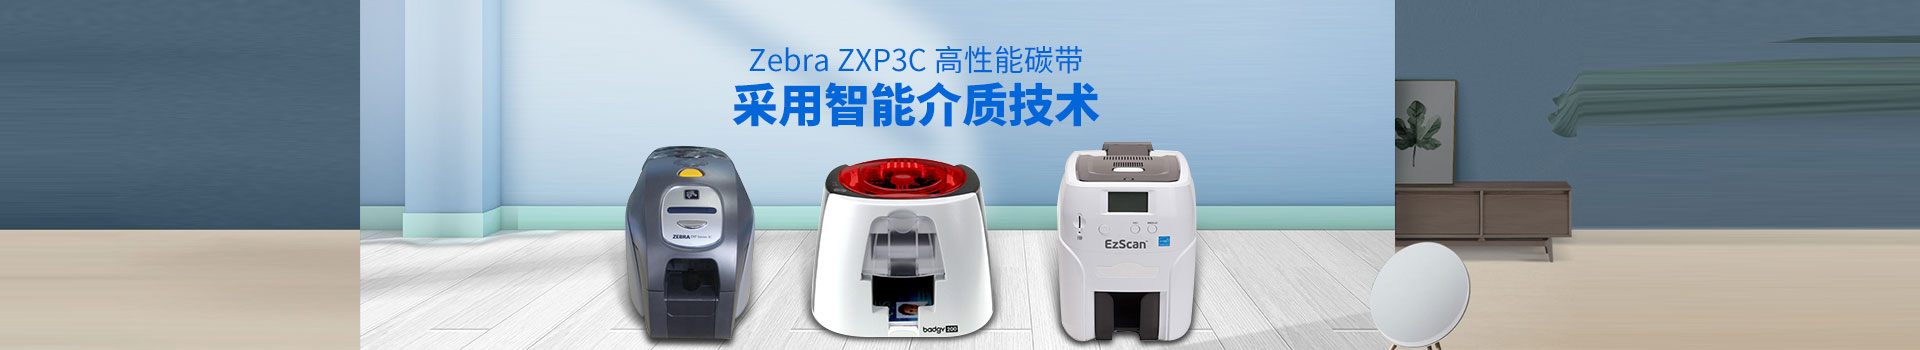 leyu-Zebra ZXP3C高性能碳帶,采用智能介質技術